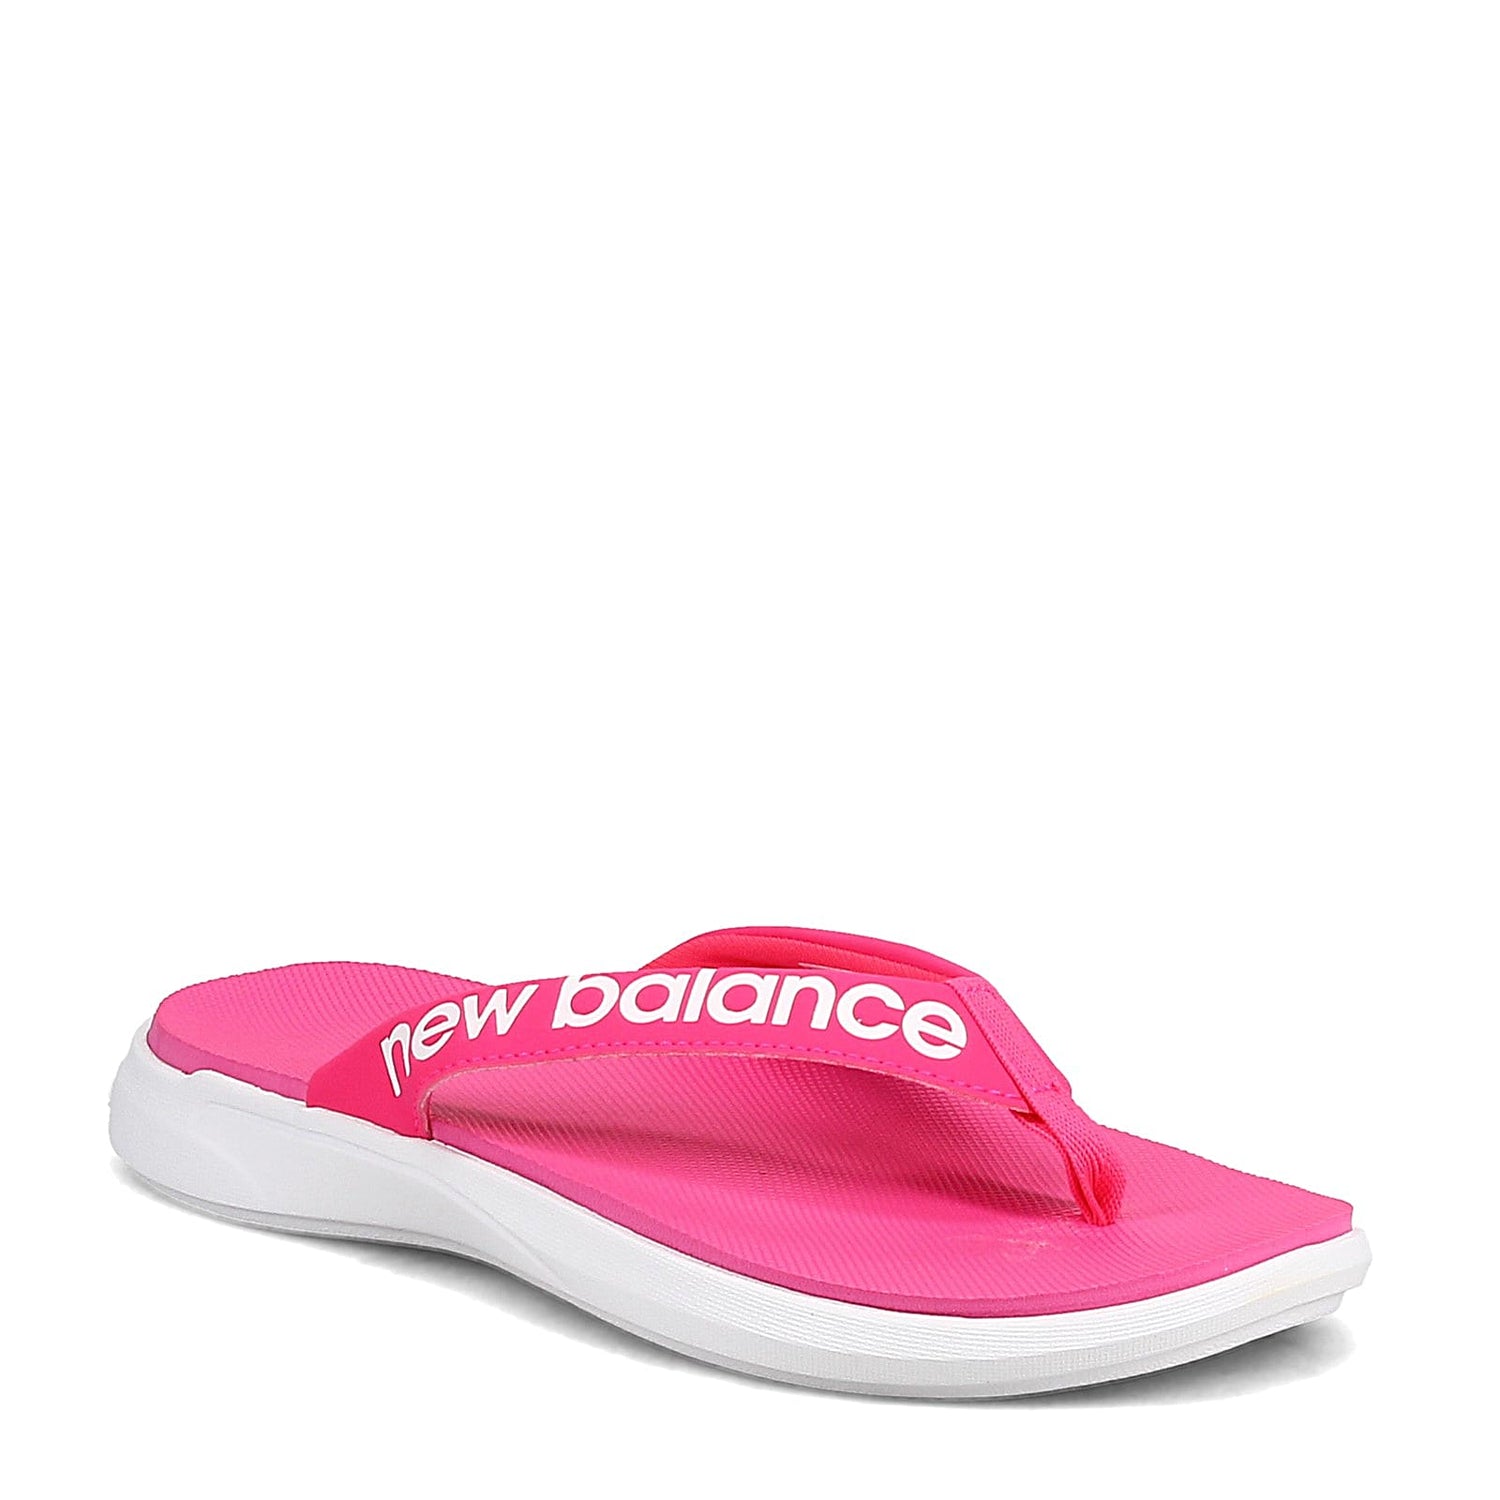 Peltz Shoes  Women's New Balance 340 Sandal